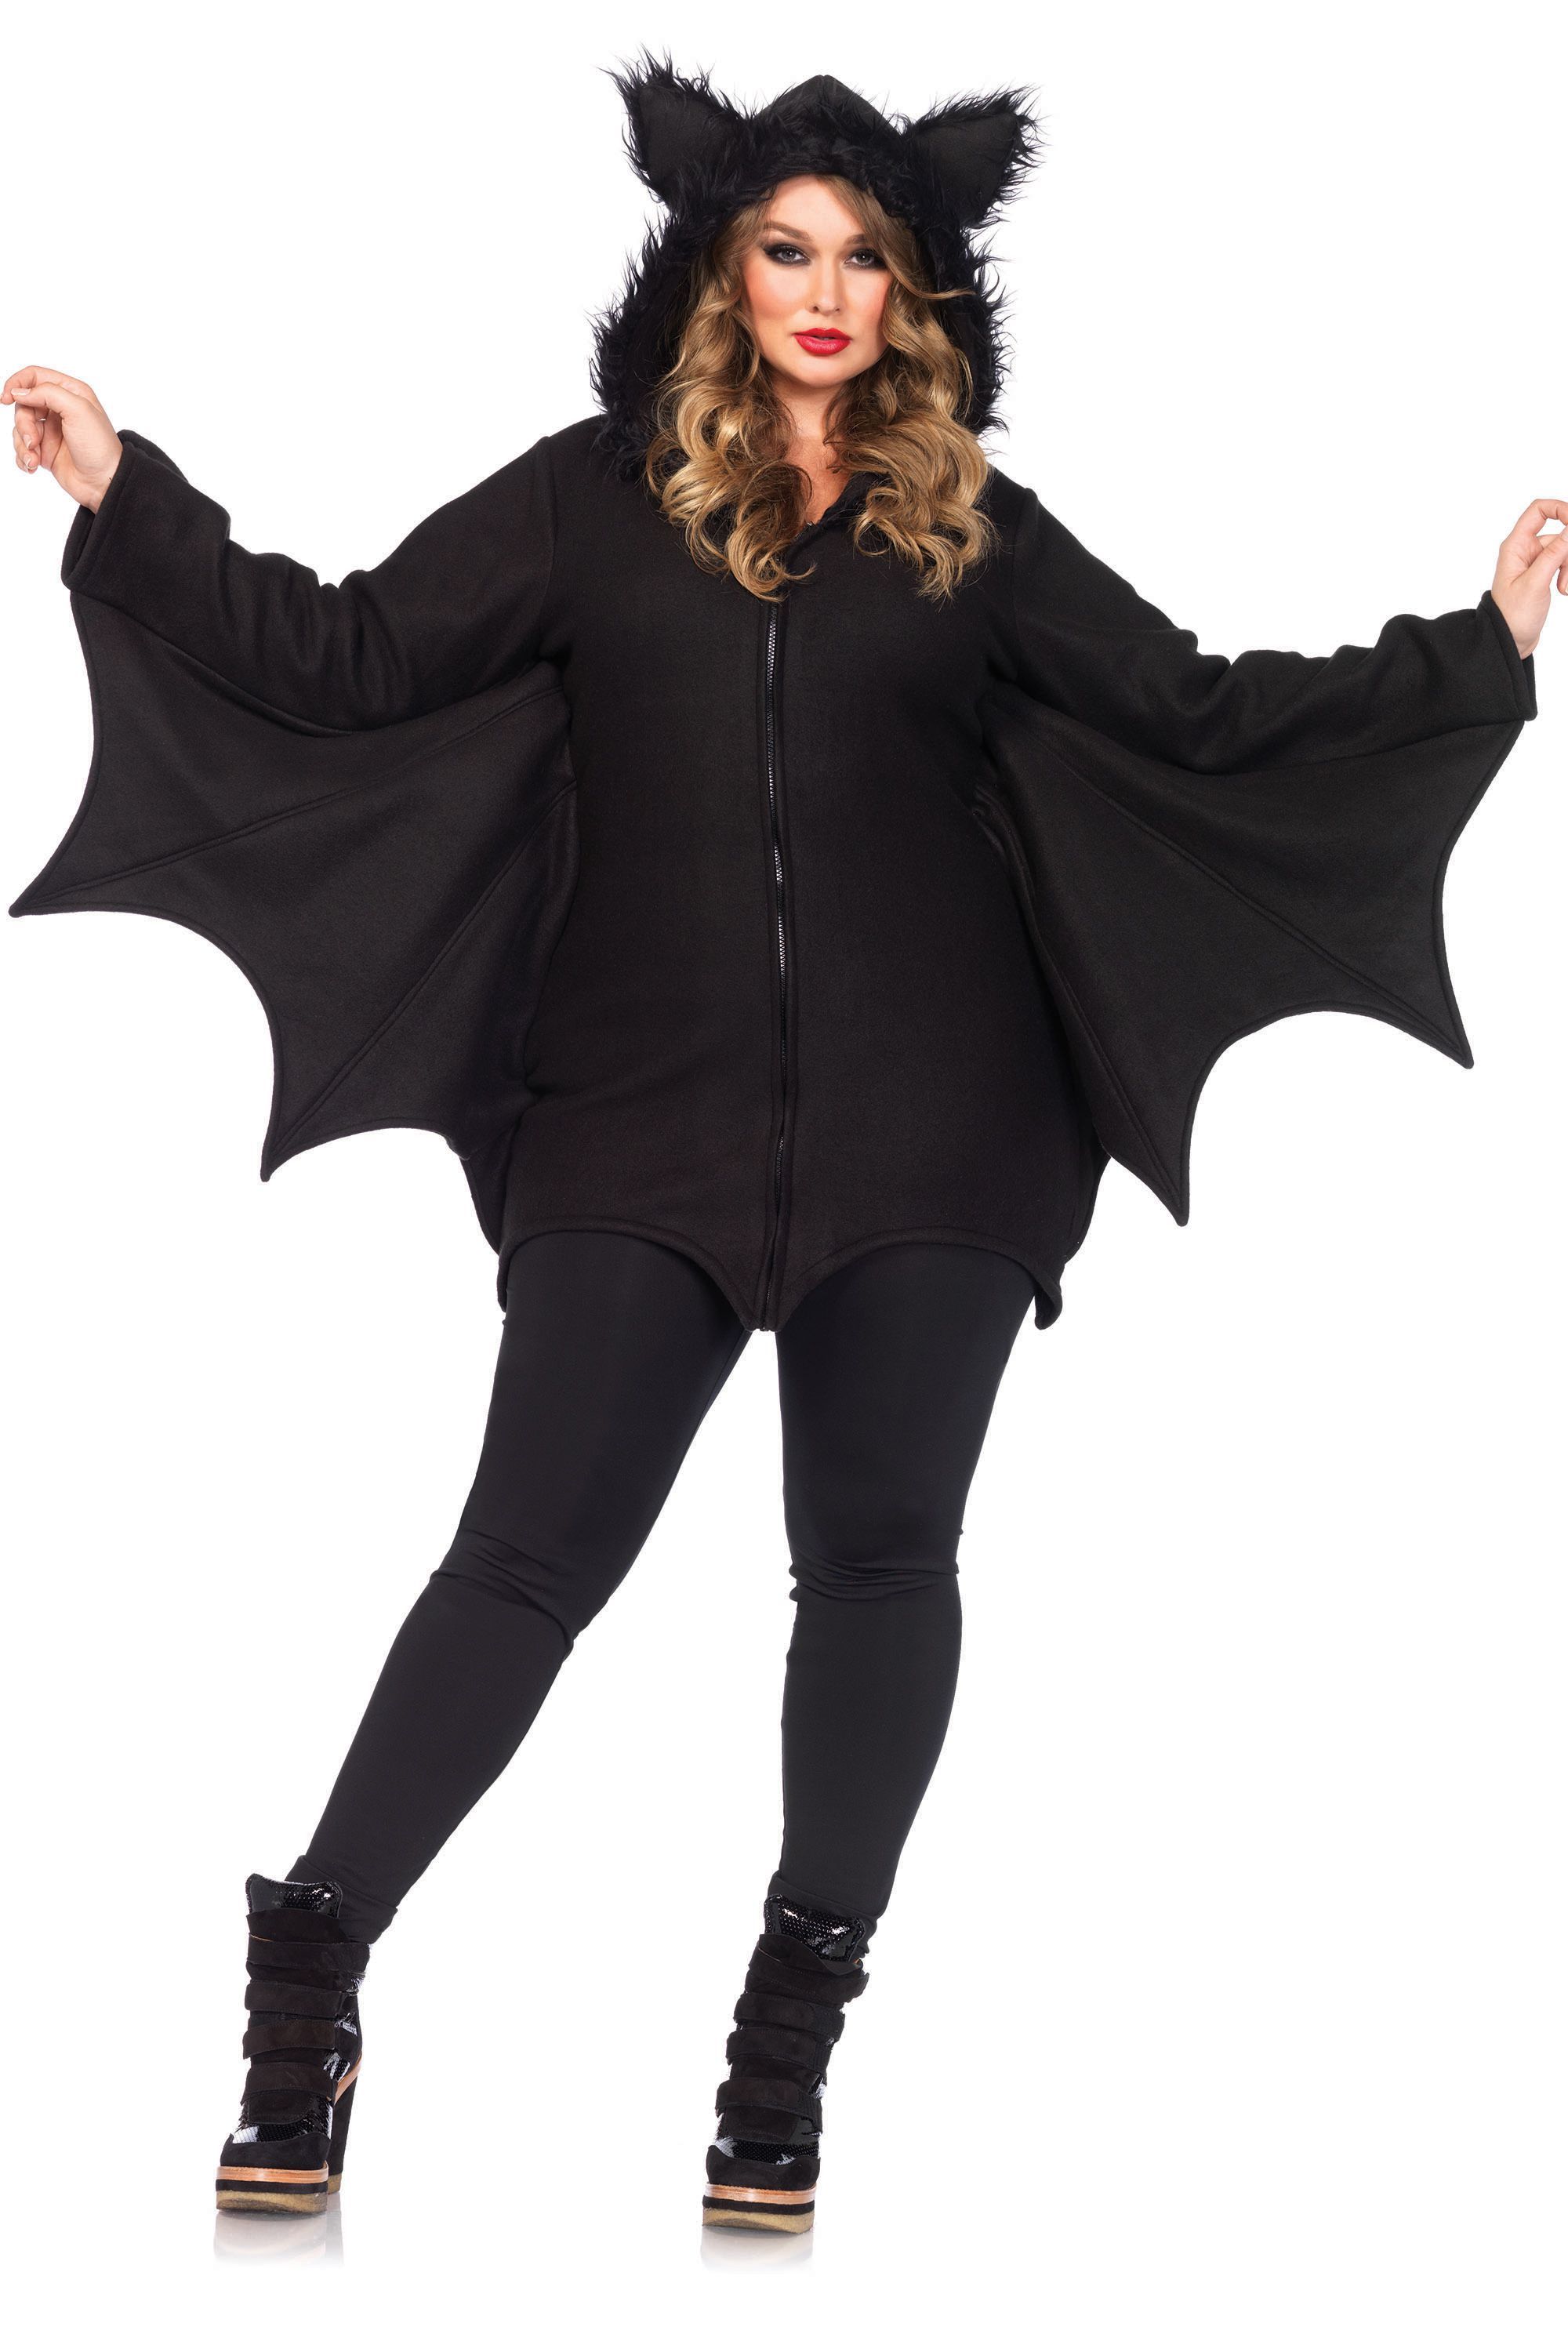 slimming costume de halloween kubota pierdere în alimentator de greutate